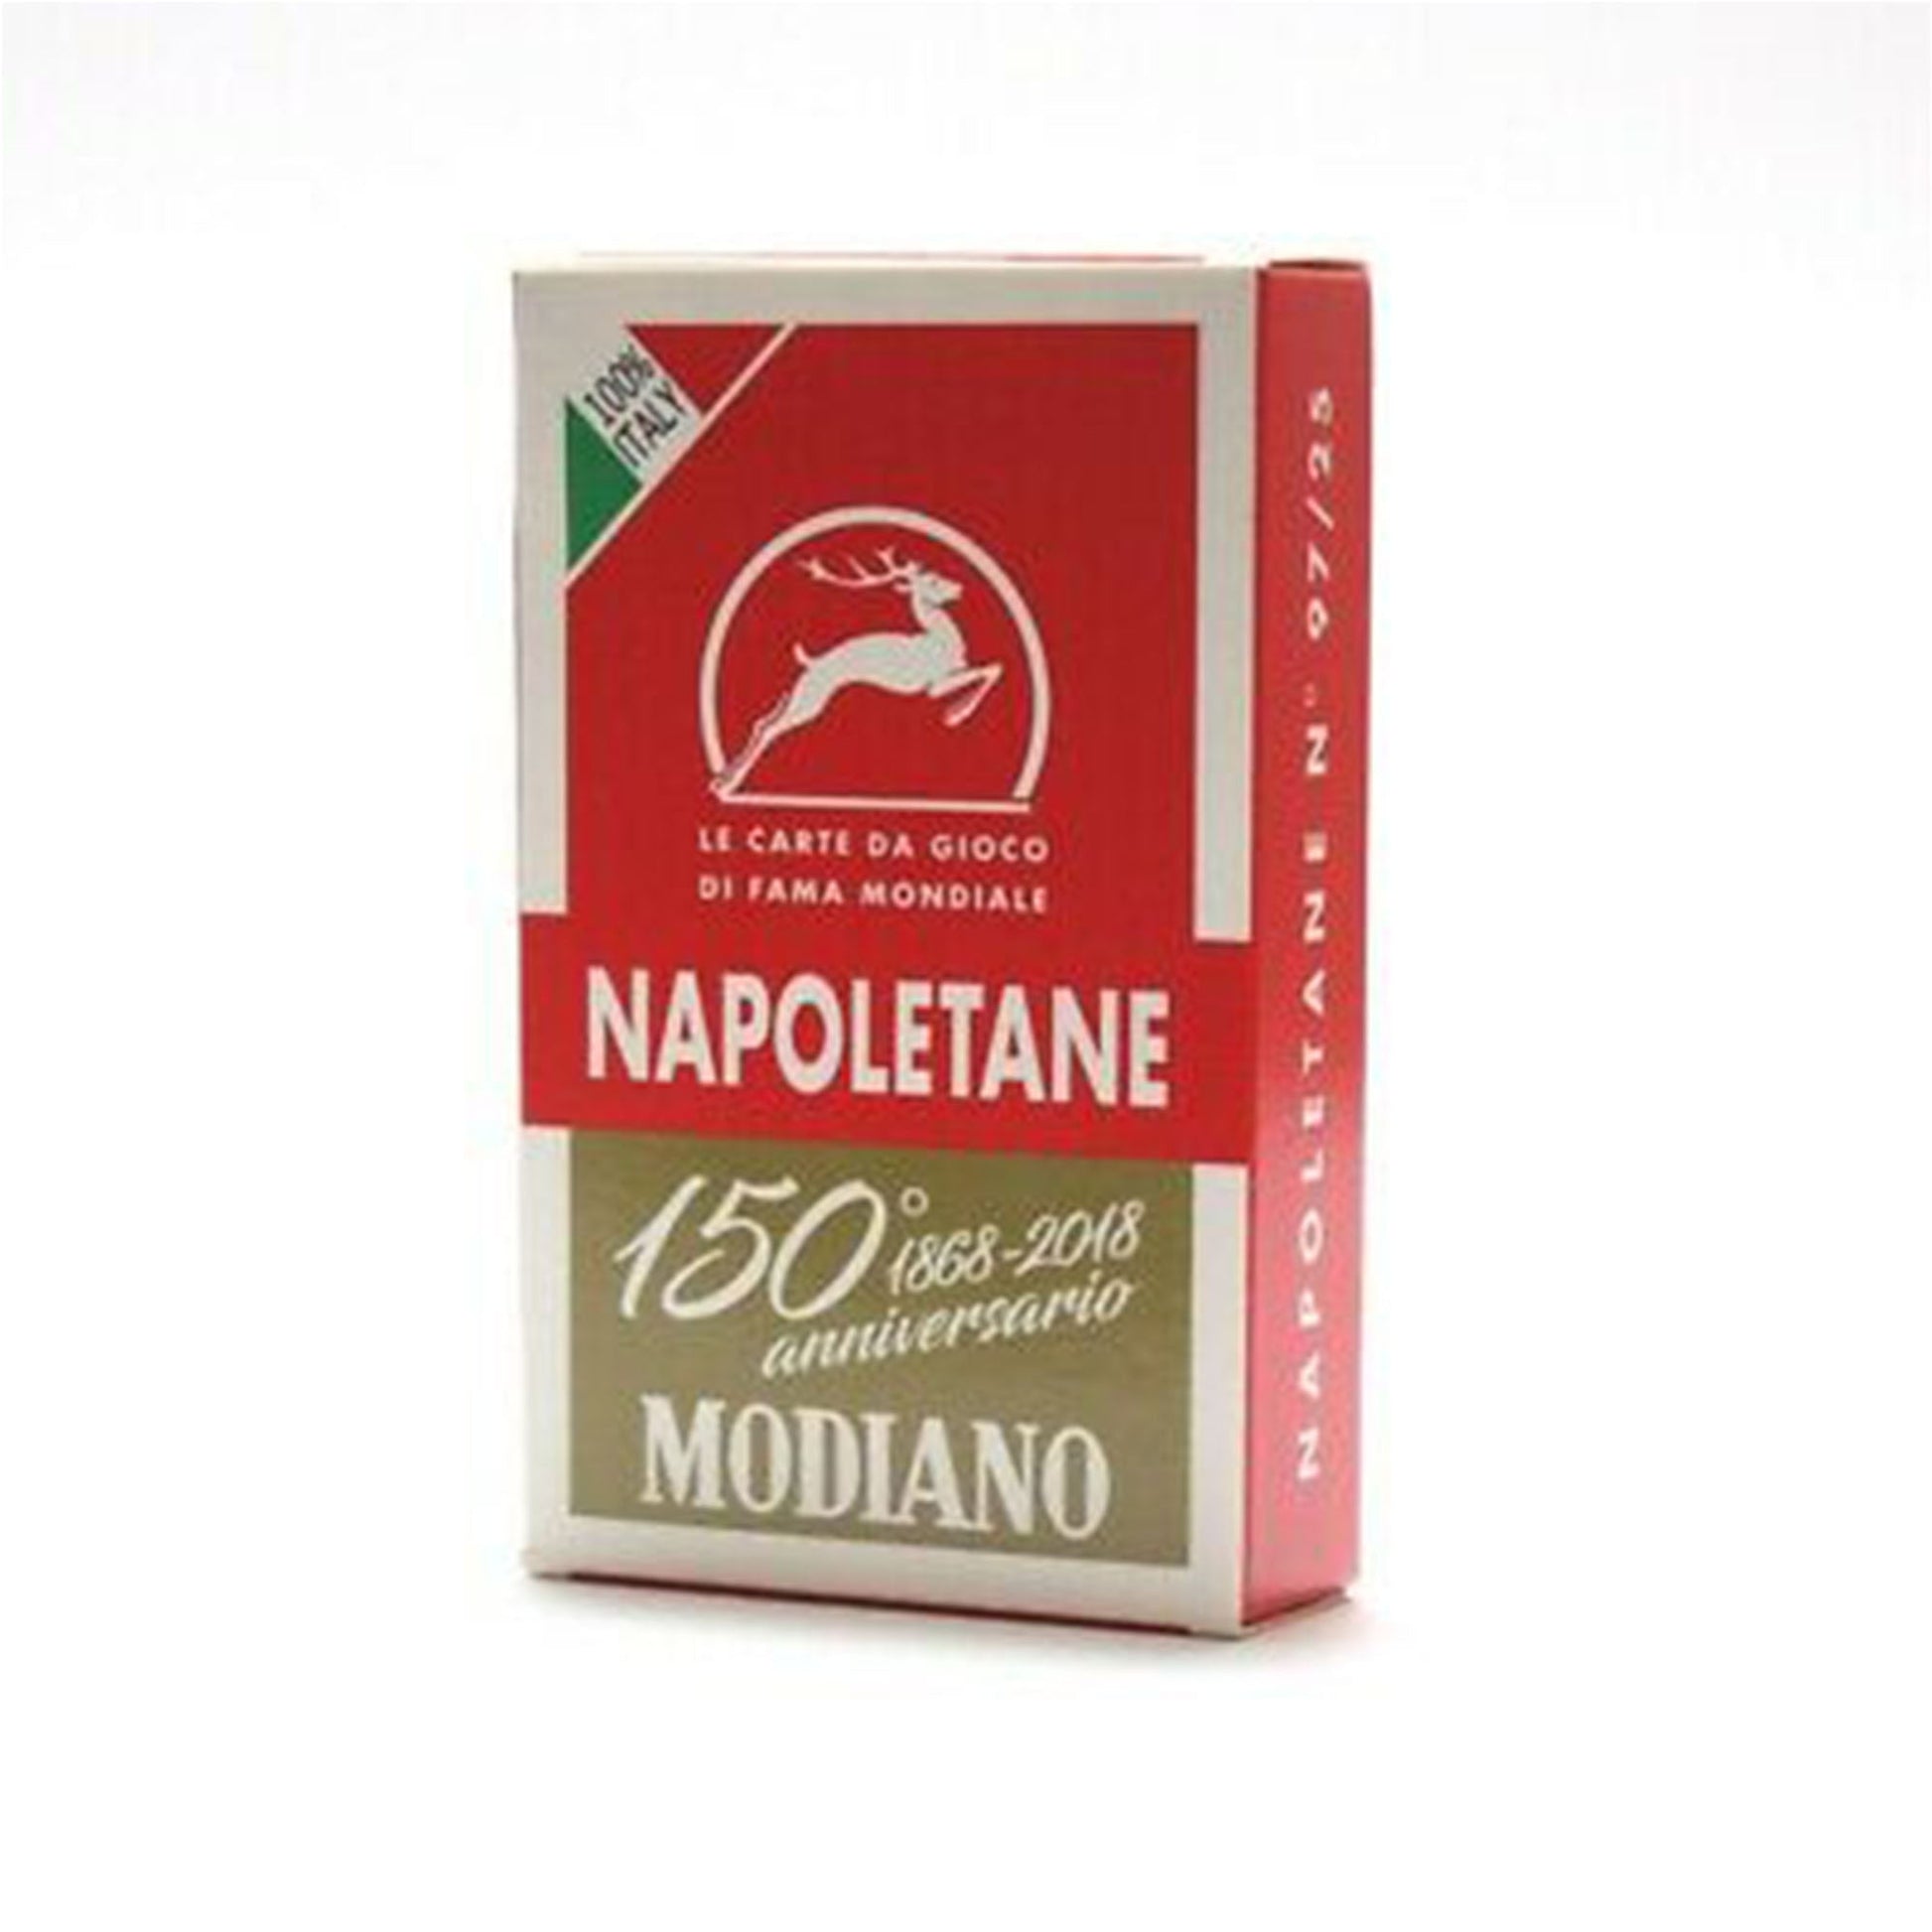 Modiano Napoletane Cards